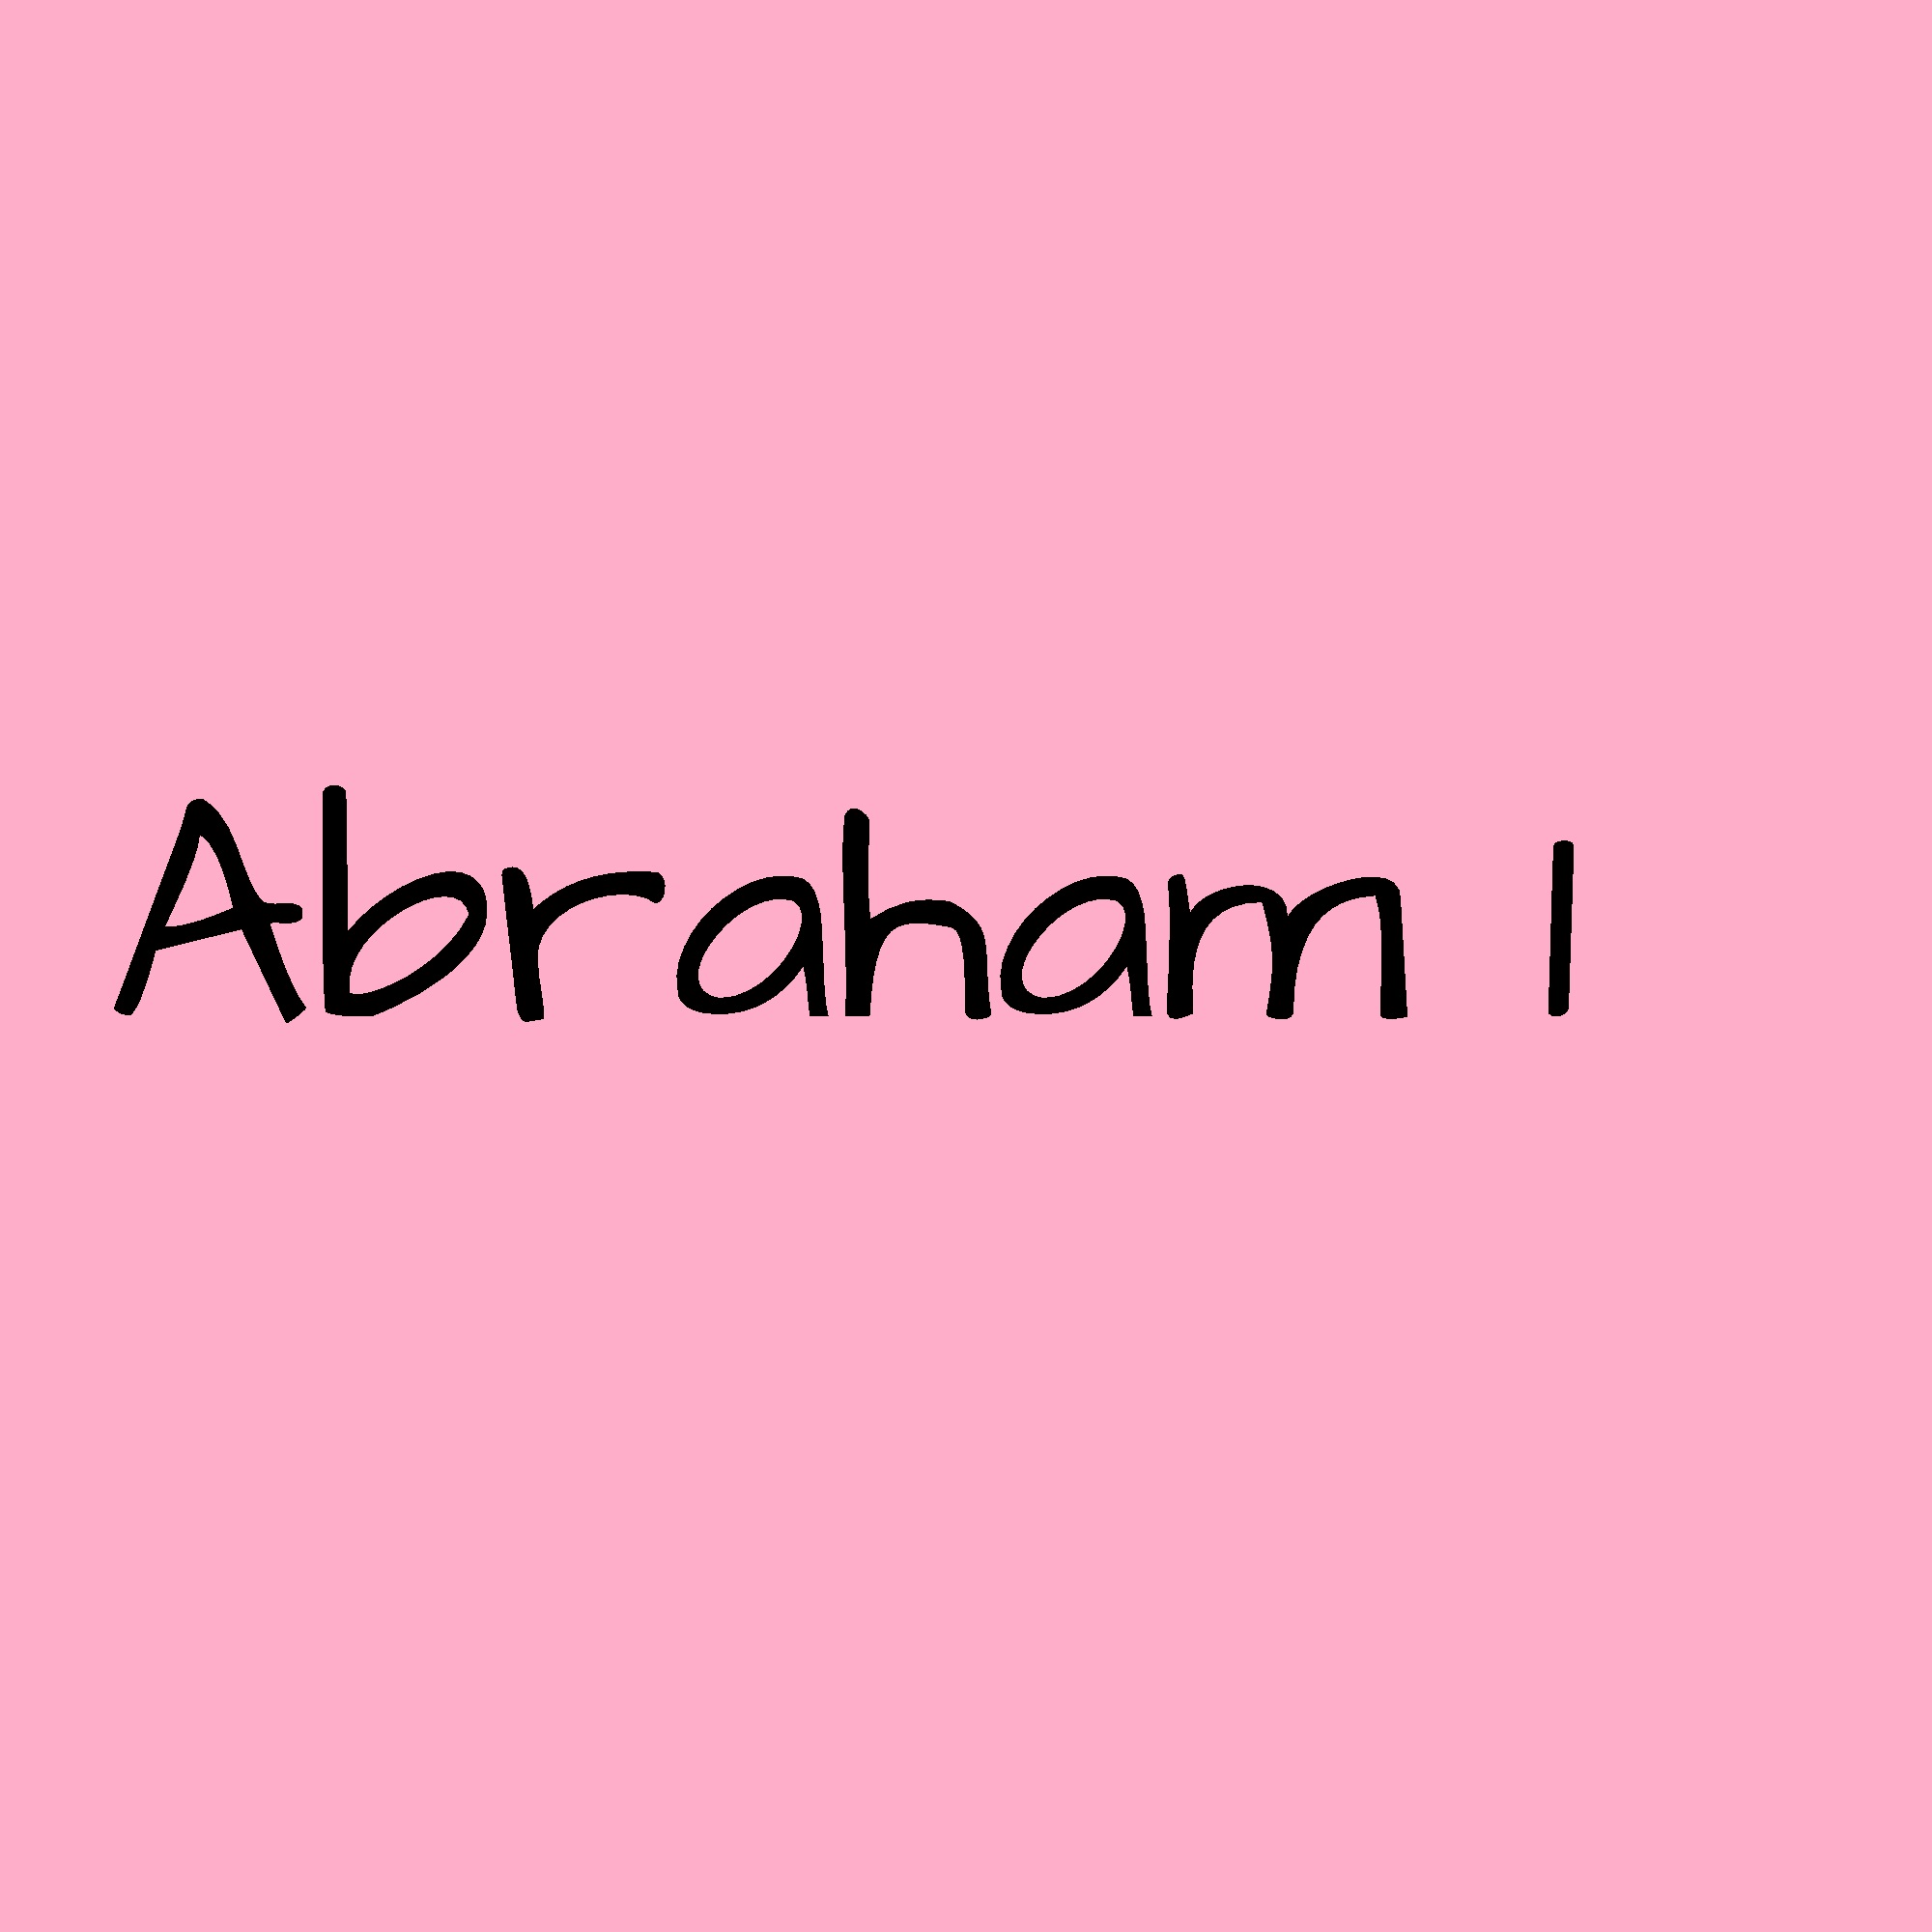 Abraham I